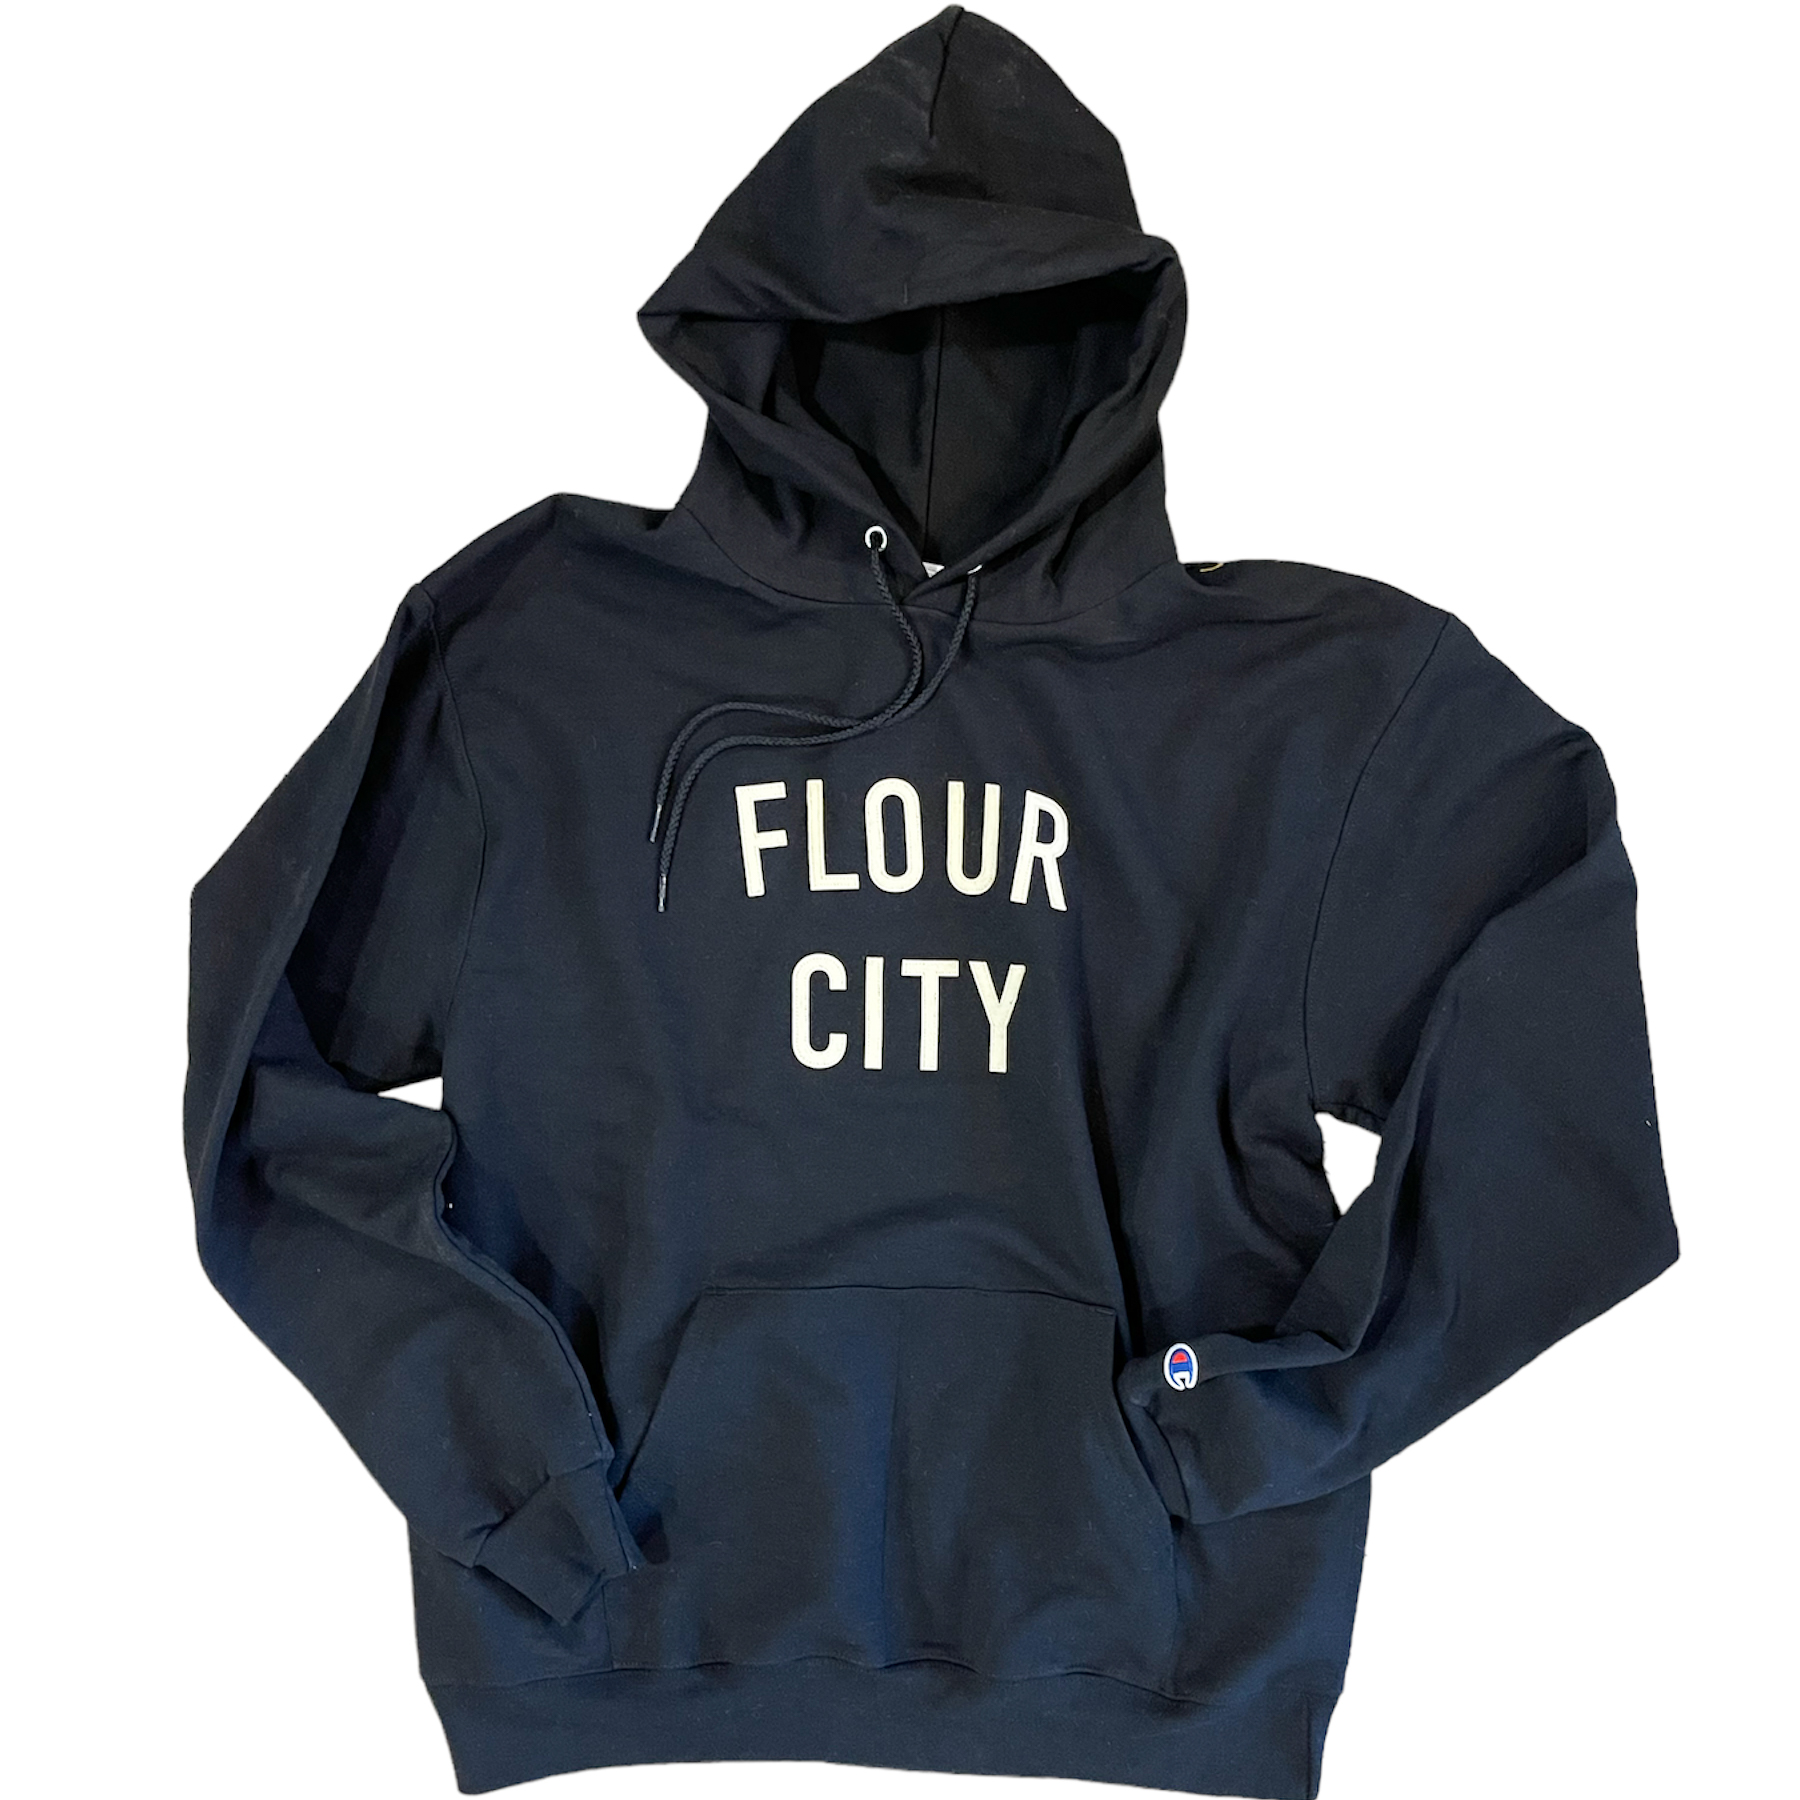 Flour City Stitched Letter Hoodie